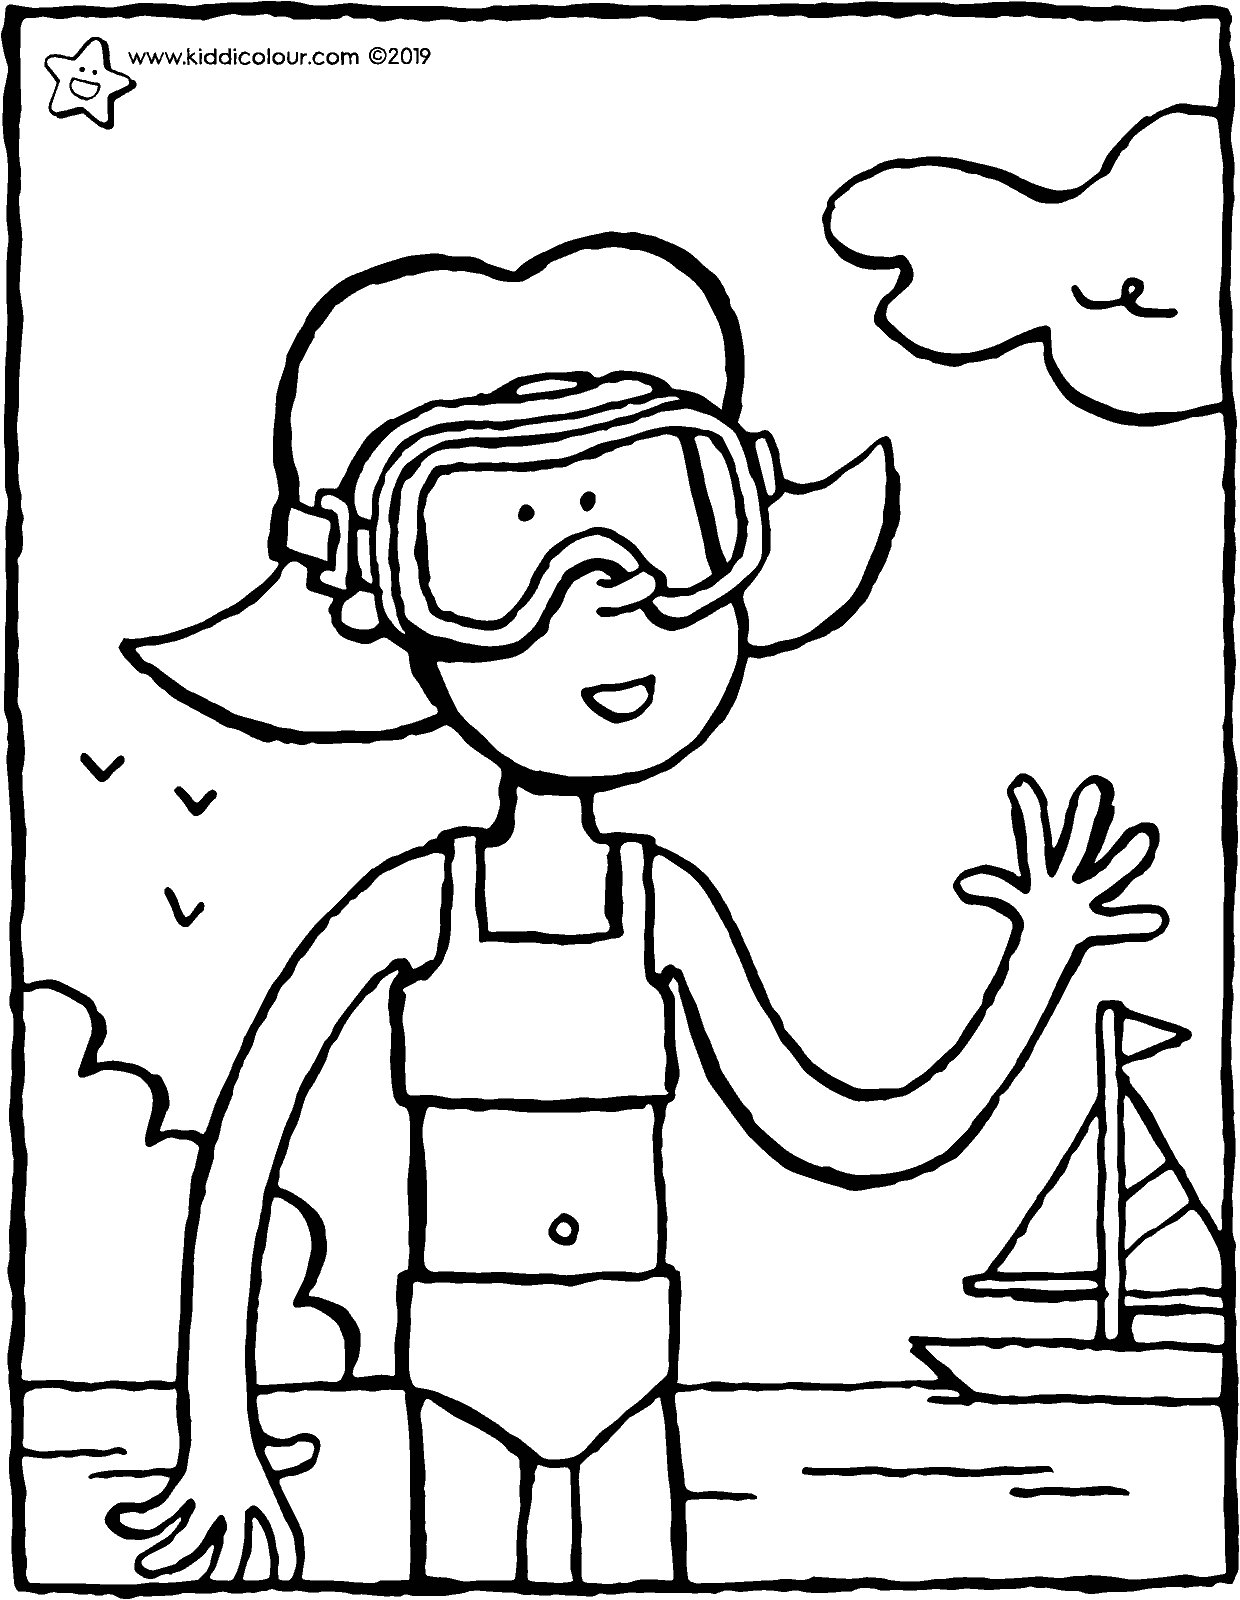 Emma at the seaside wearing goggles - kiddicolour